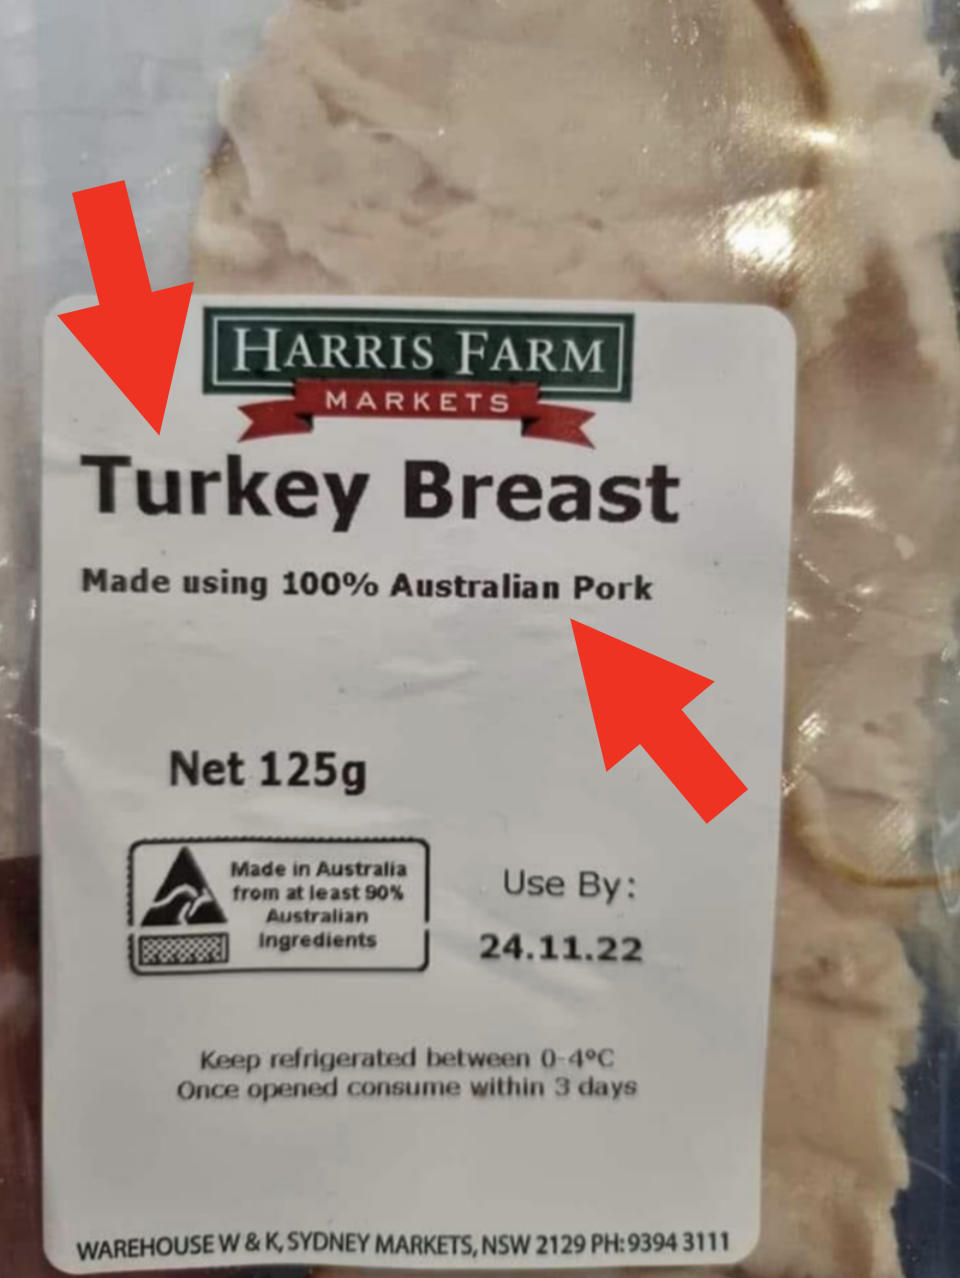 turkey breast made of australian pork